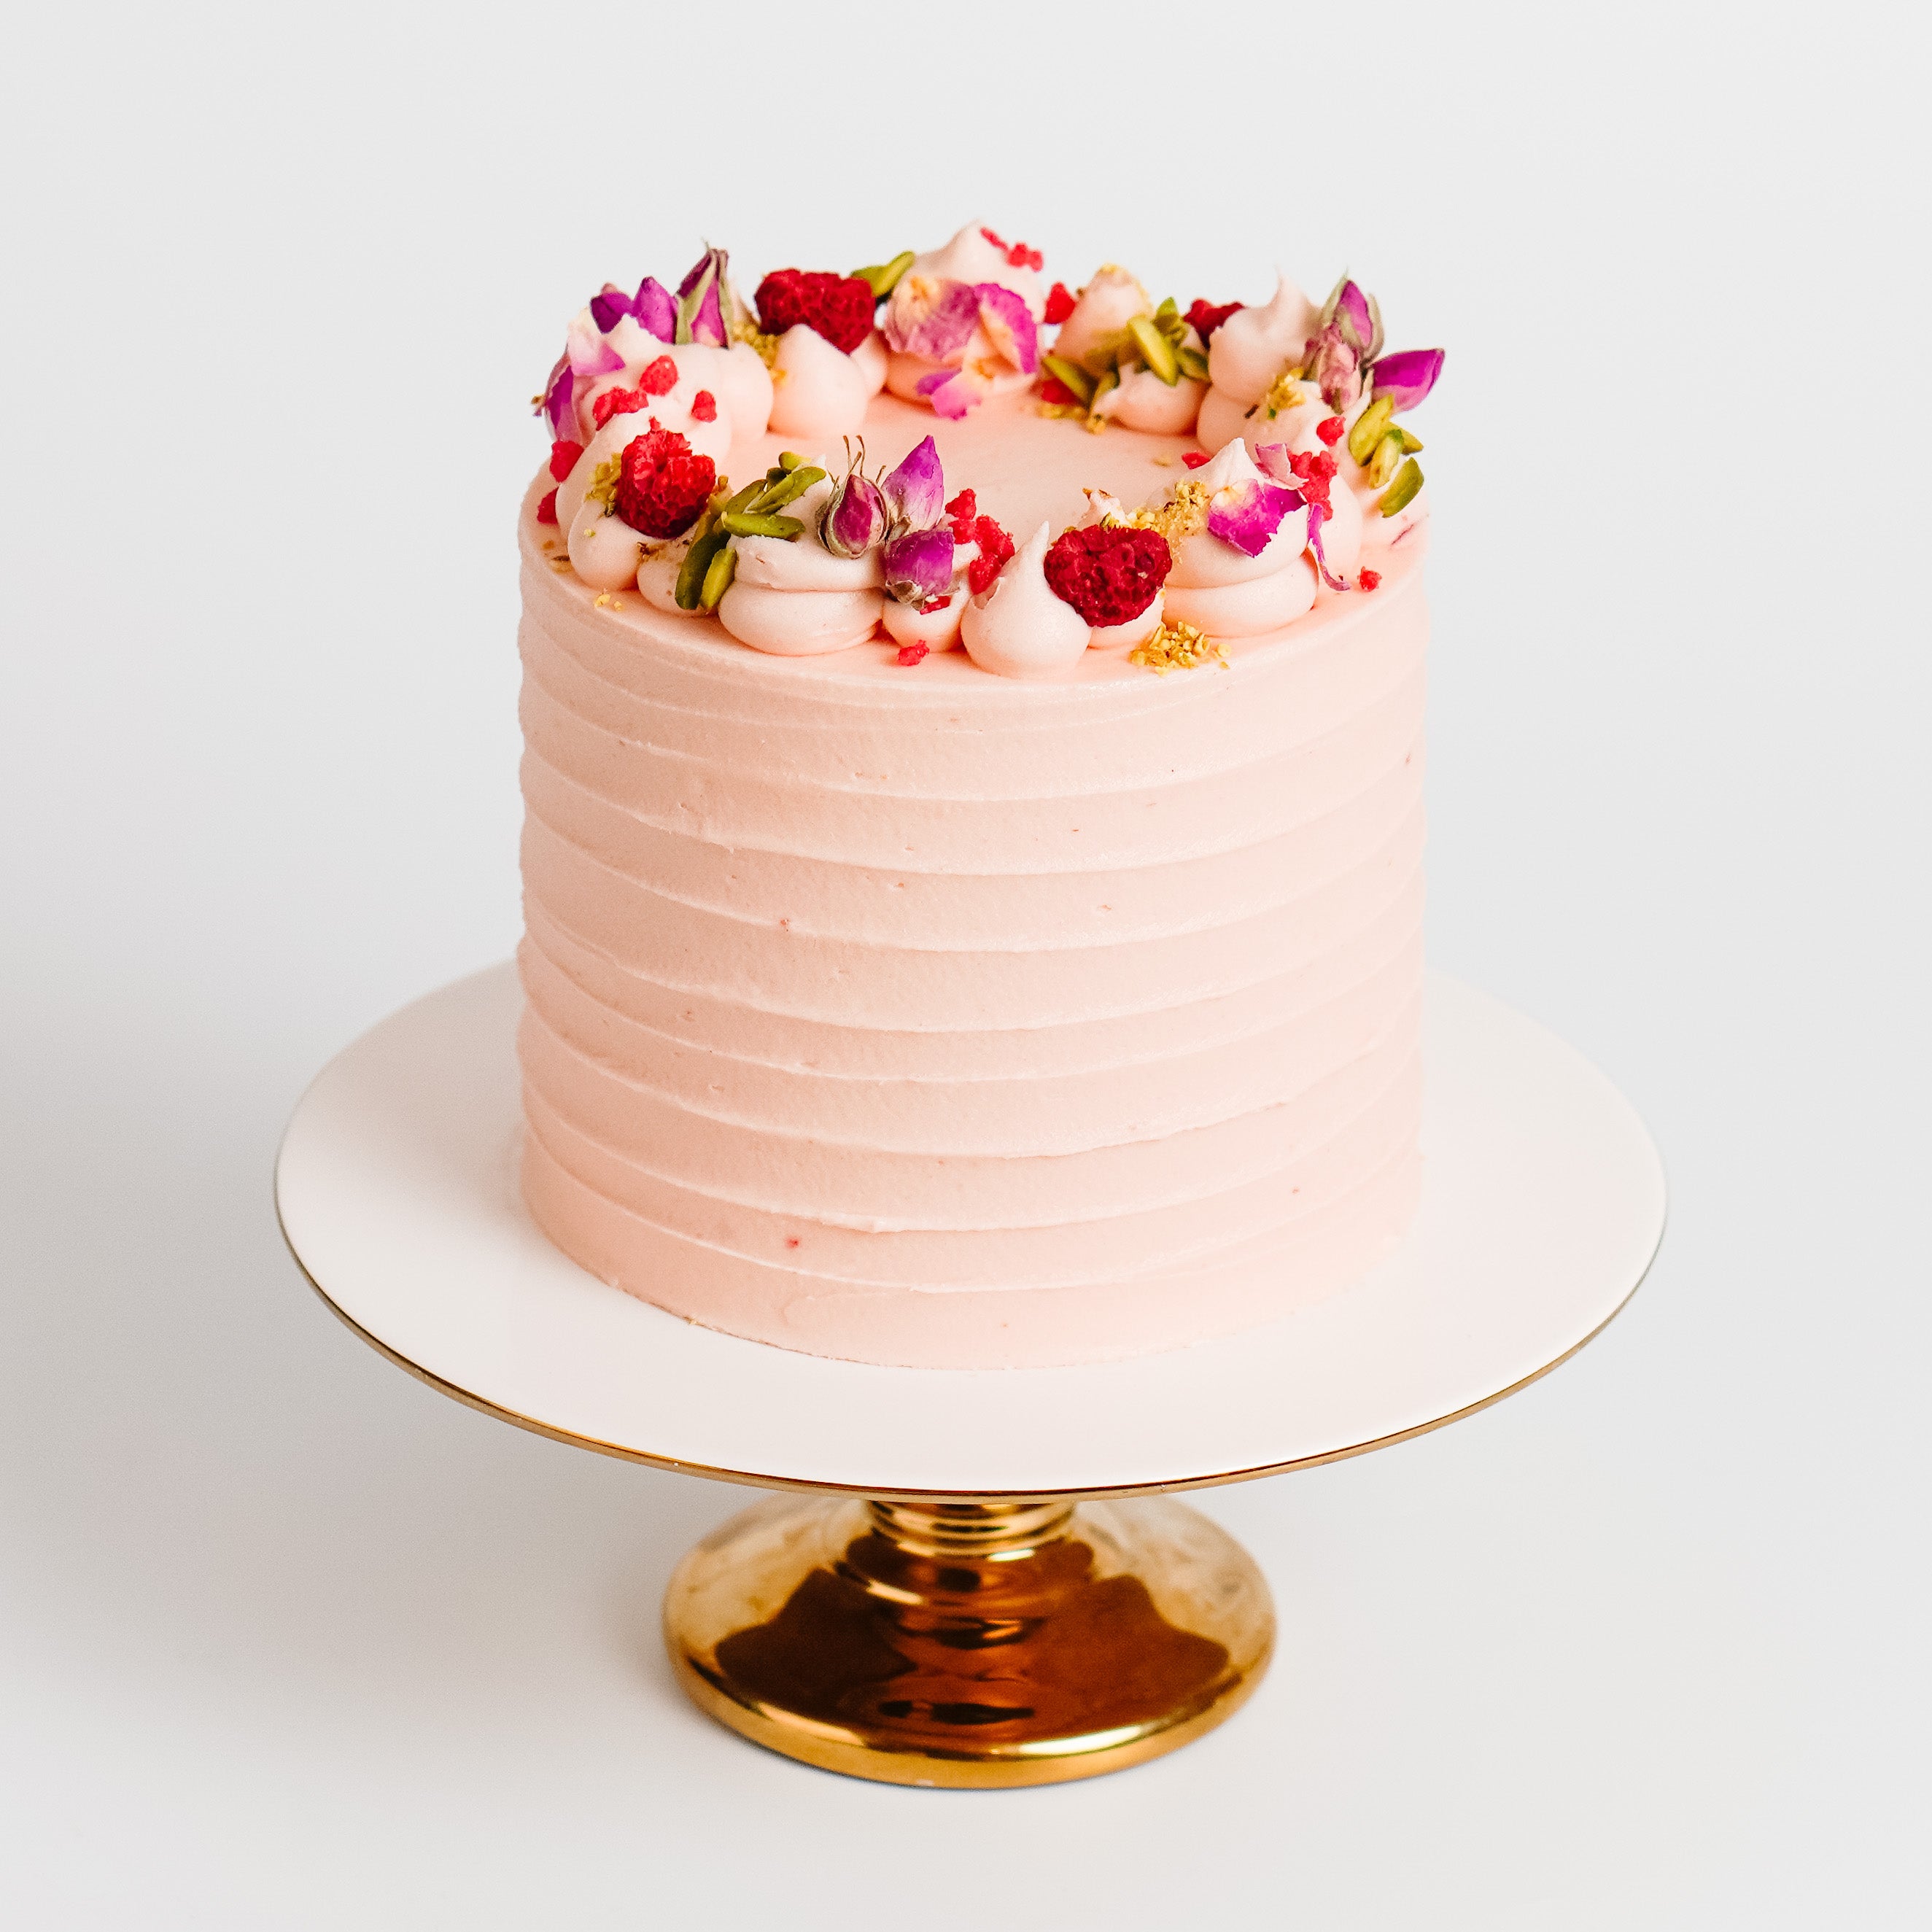 Pistachio and rosewater cake recipe - Recipes - delicious.com.au